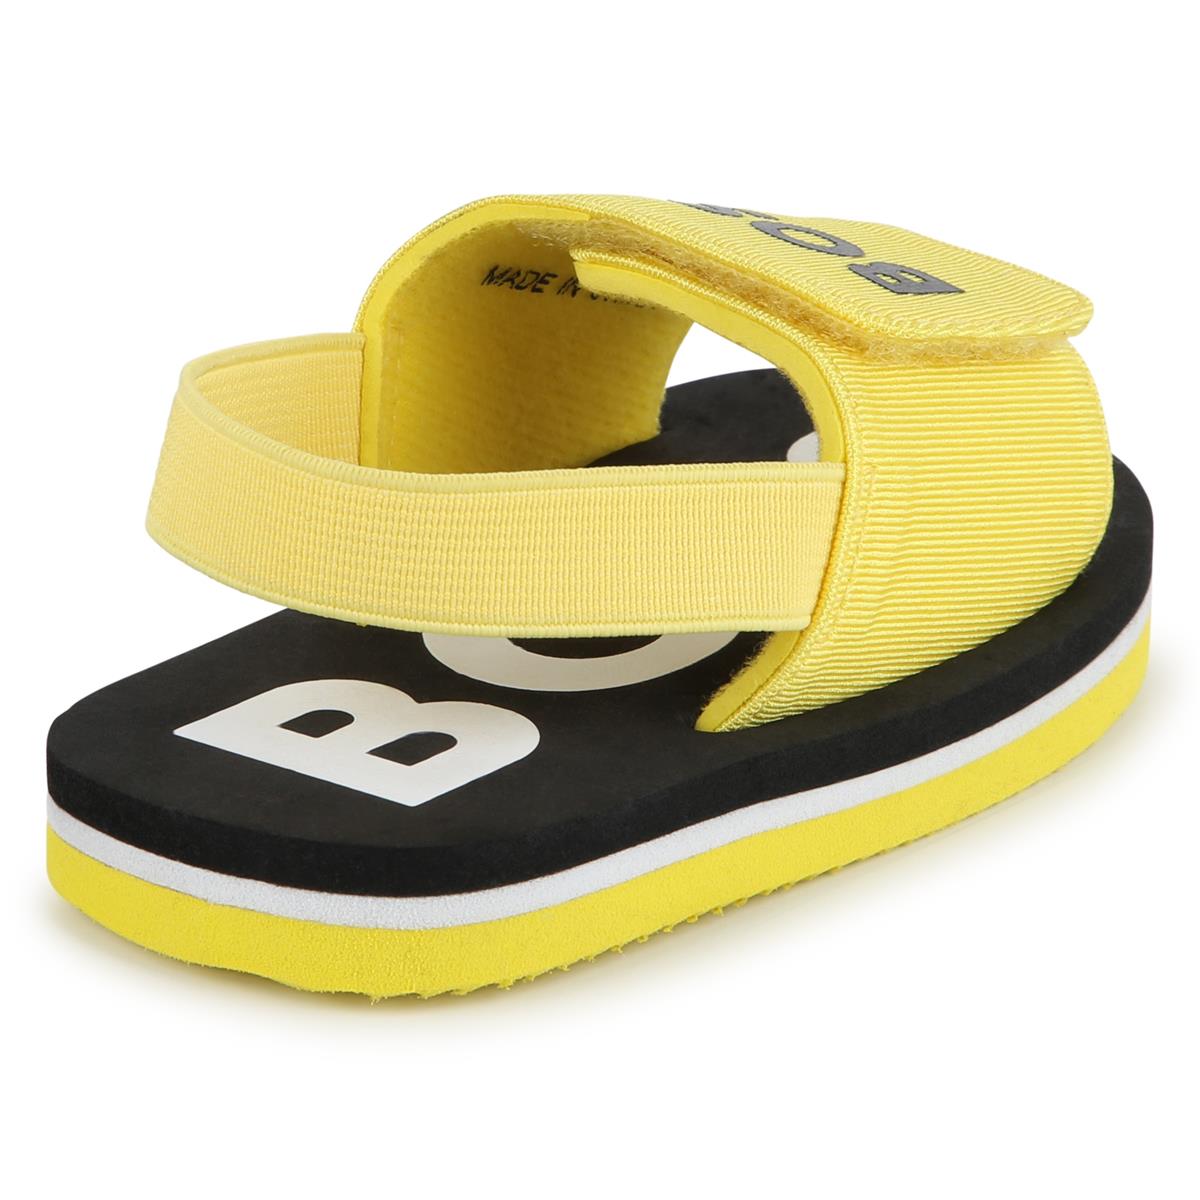 Baby Boys Yellow Sandals